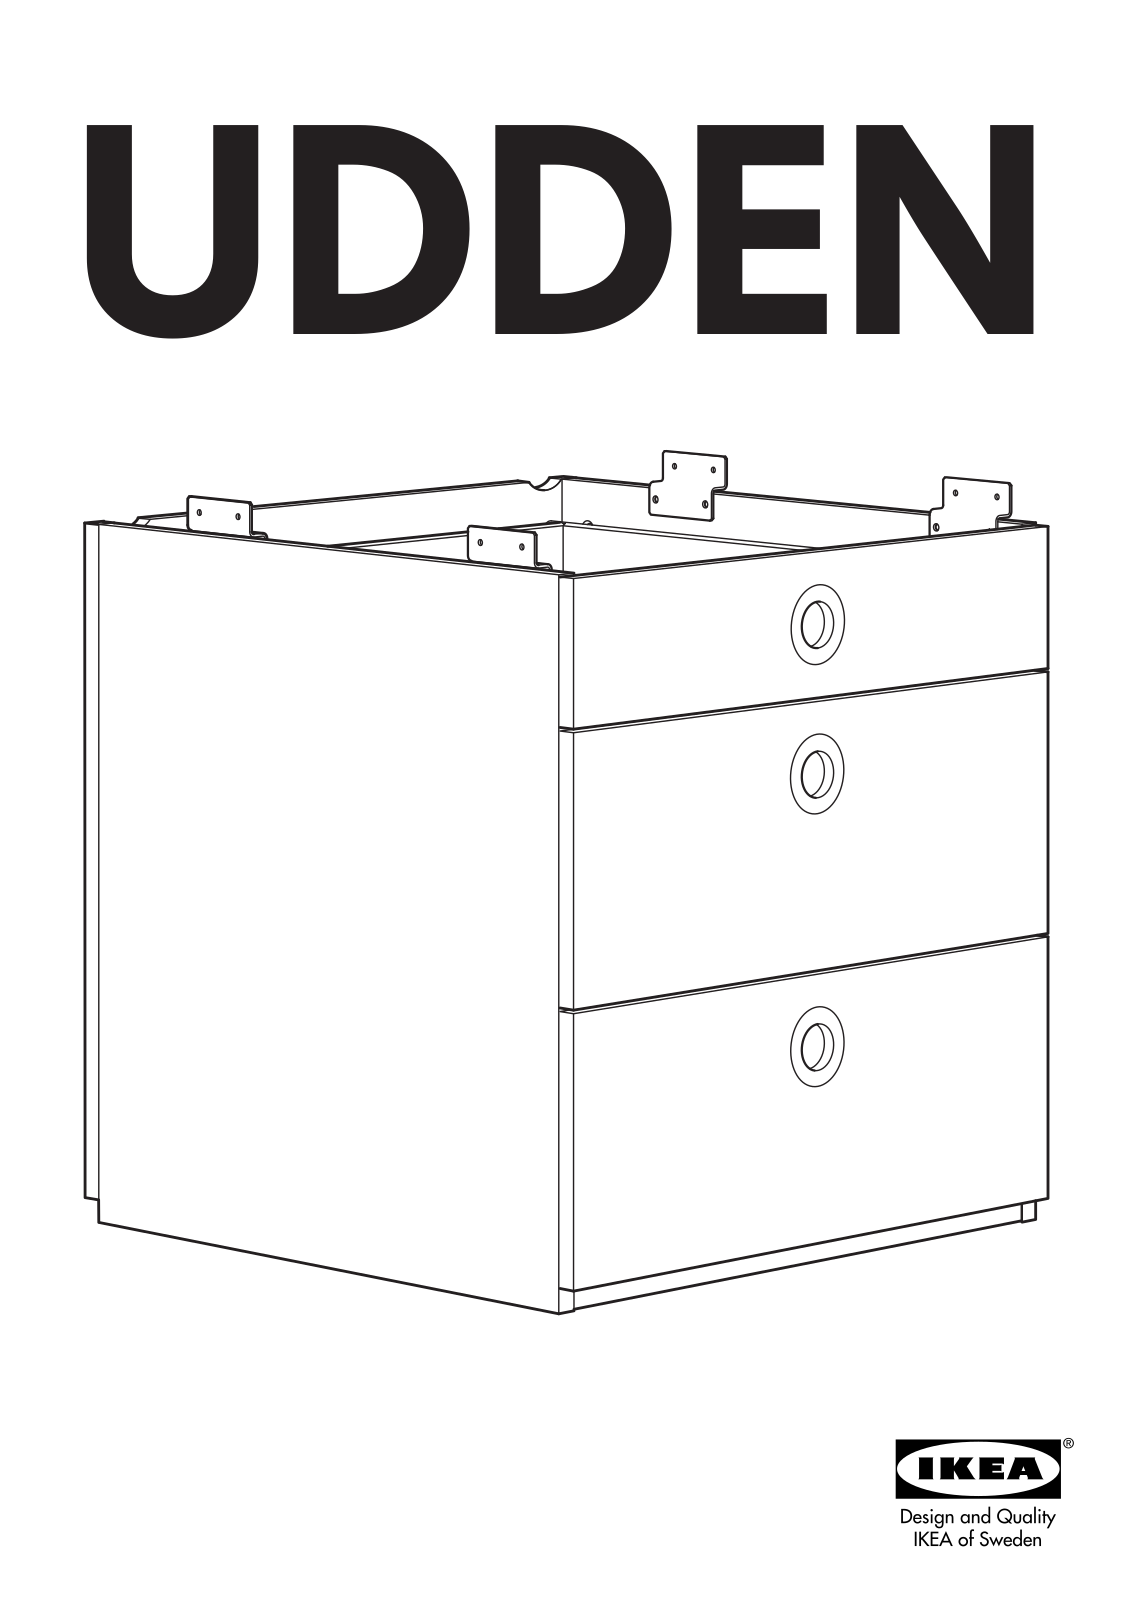 IKEA UDDEN DRAWER UNIT 23 58X24 38 Assembly Instruction